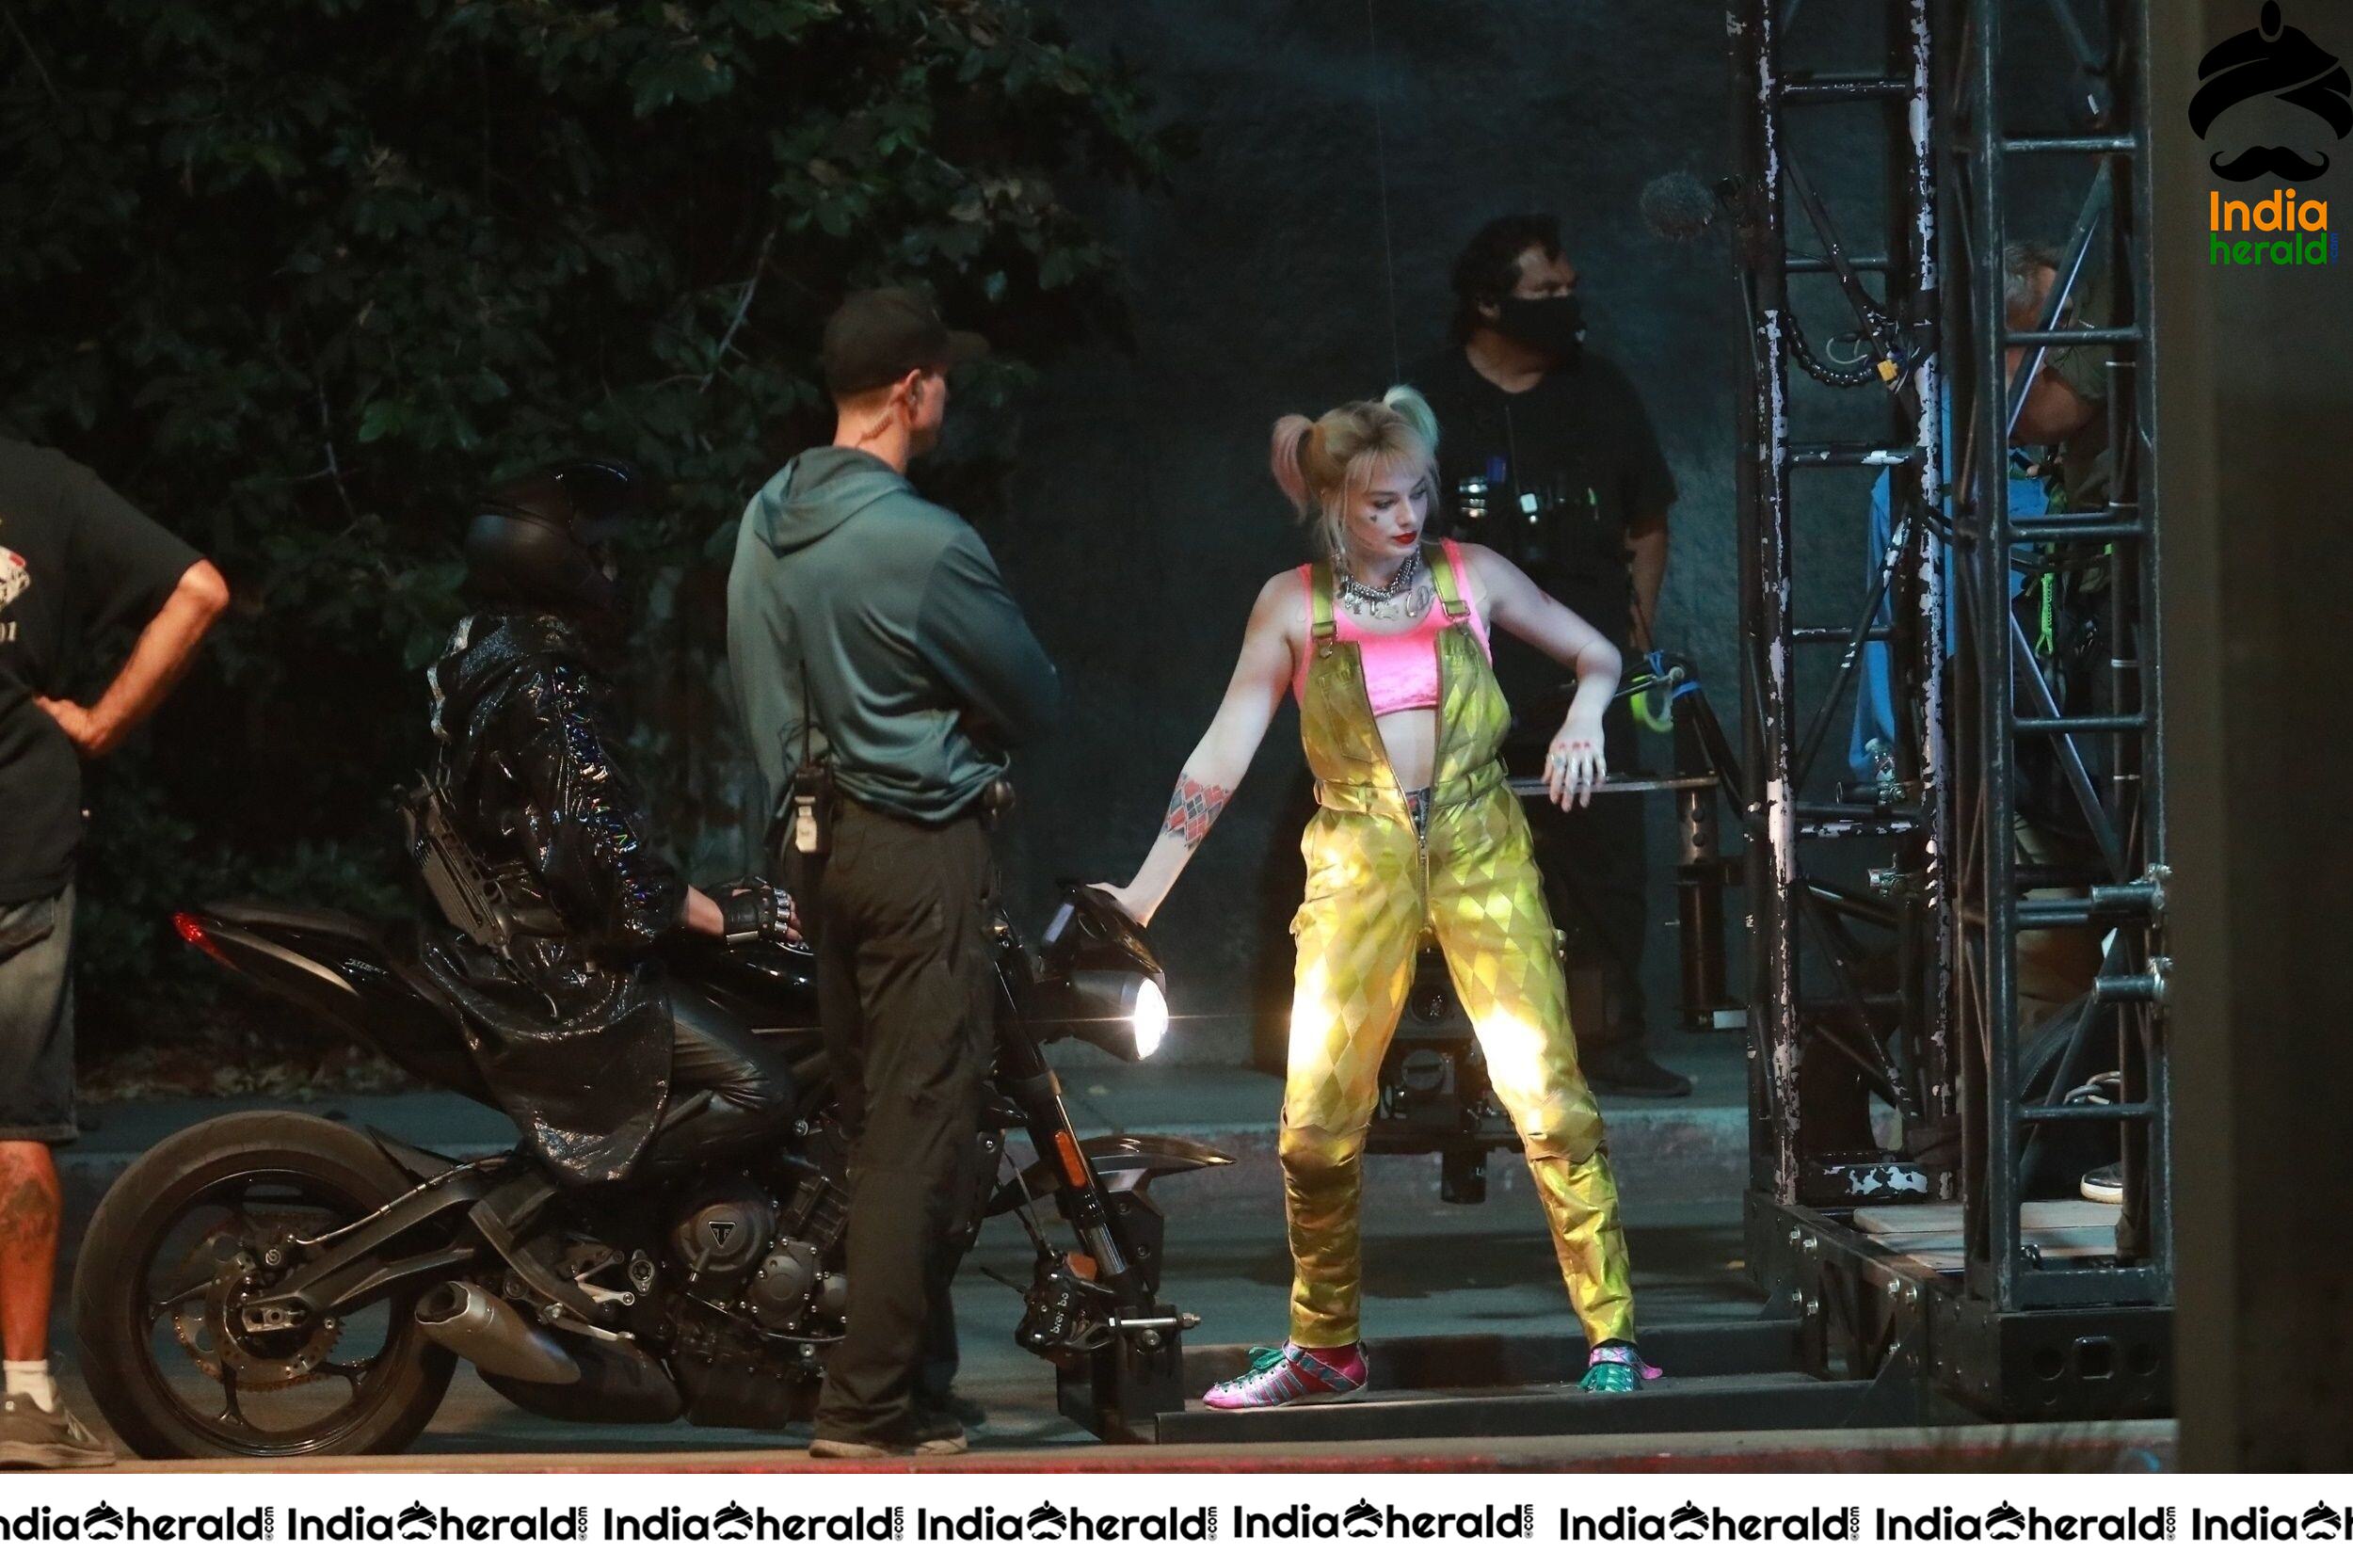 India Herald Exclusive Margot Robbie On The Sets Of Birds Of Prey At LA Set 1